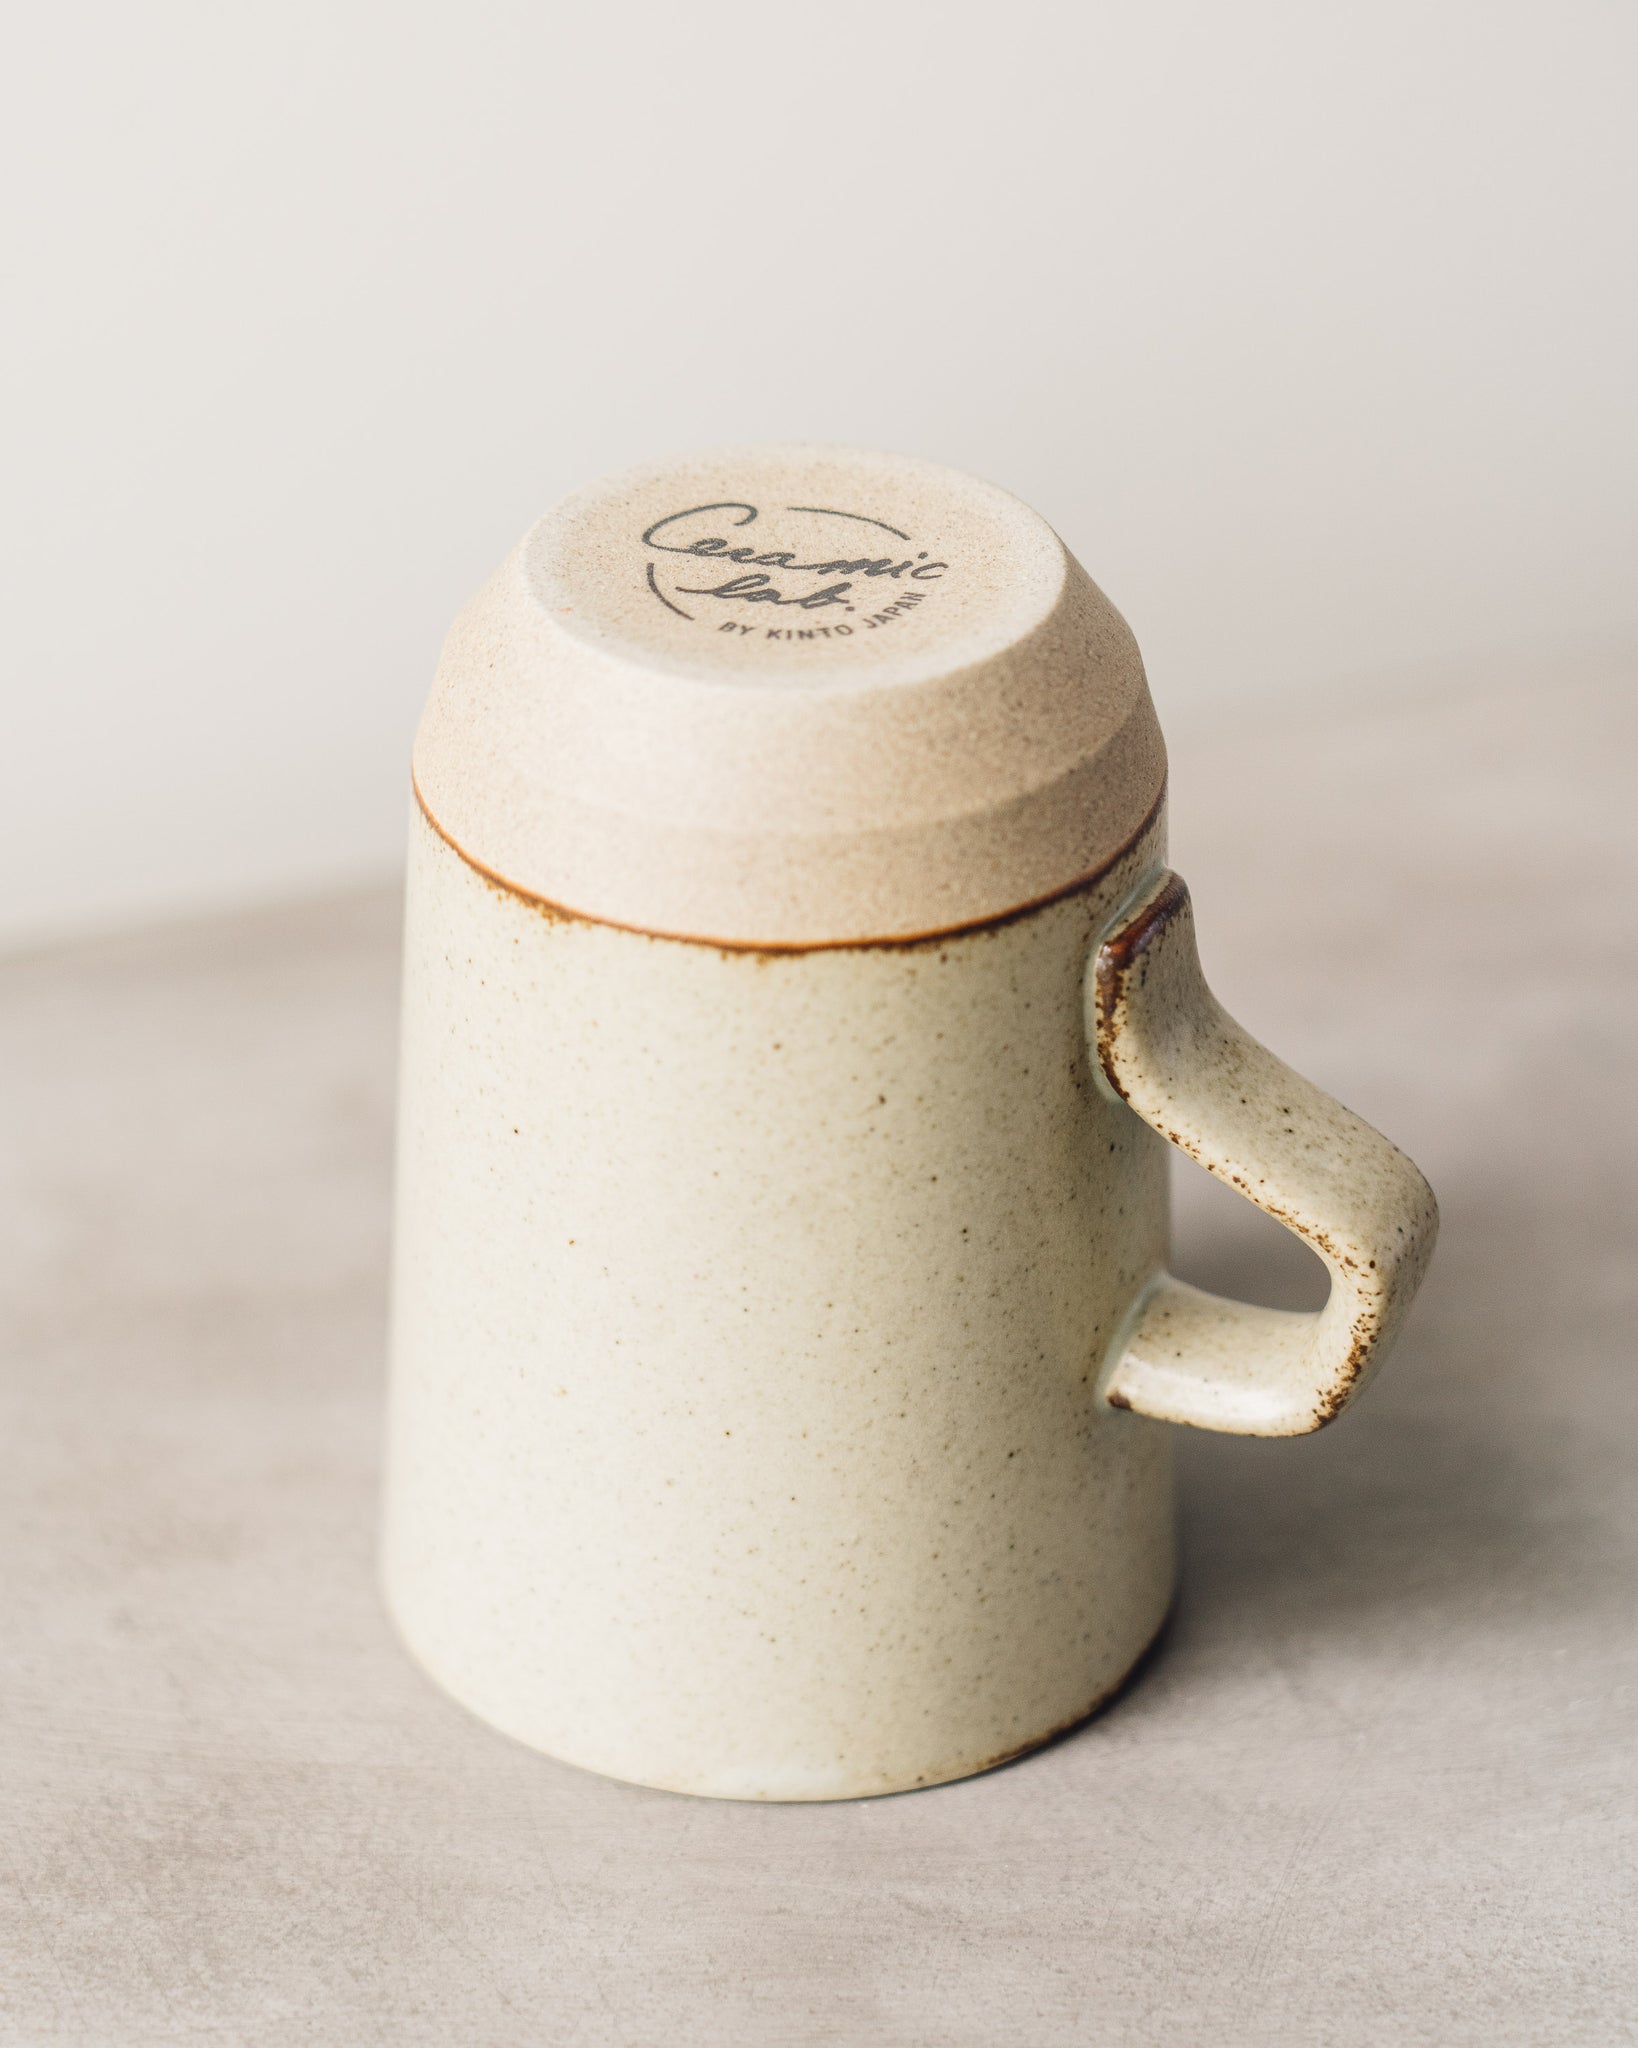 Kinto Ceramic Tall Mug